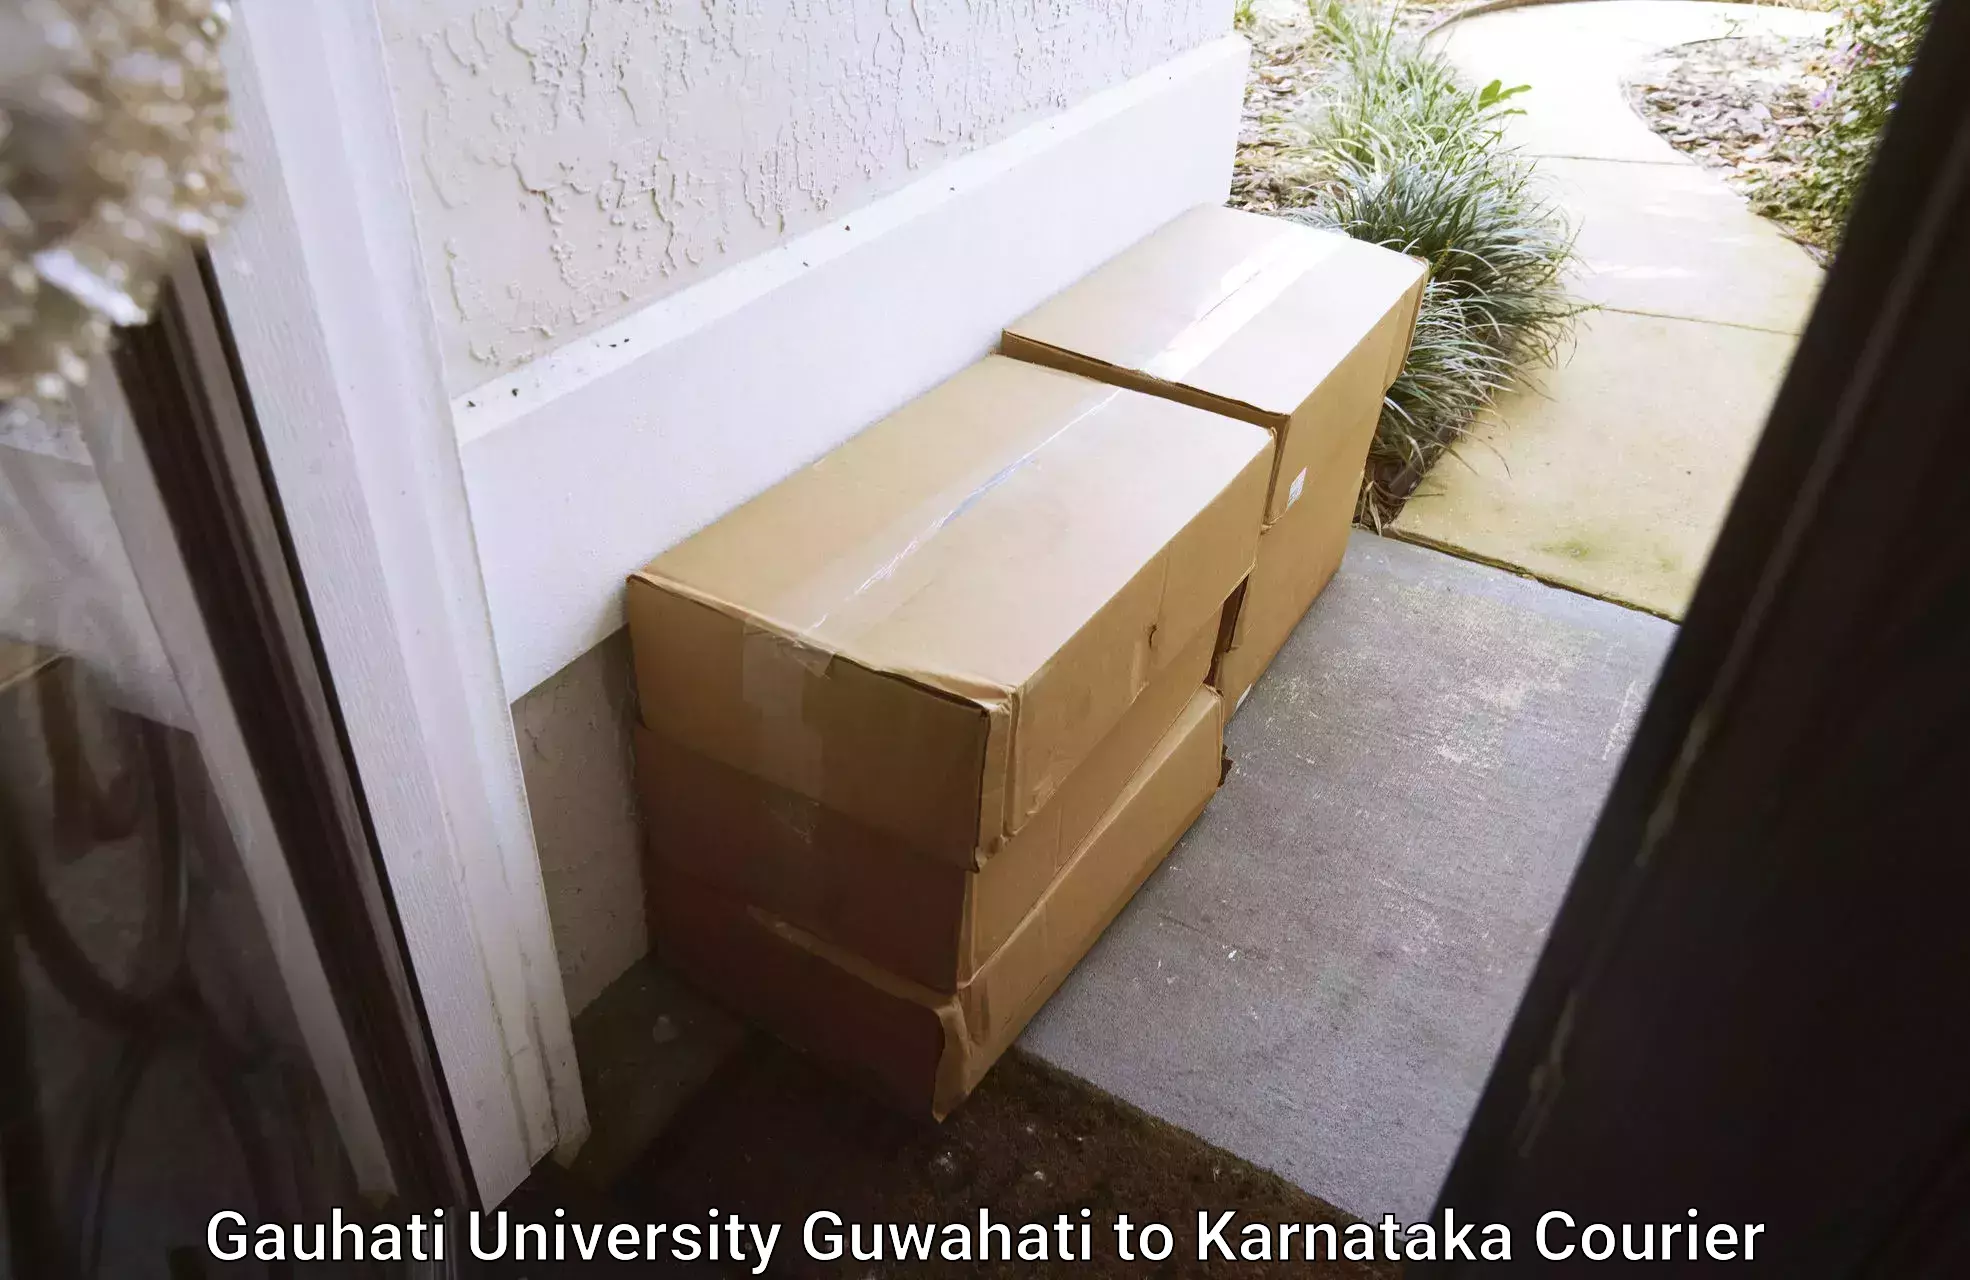 Lightweight parcel options Gauhati University Guwahati to Karnataka